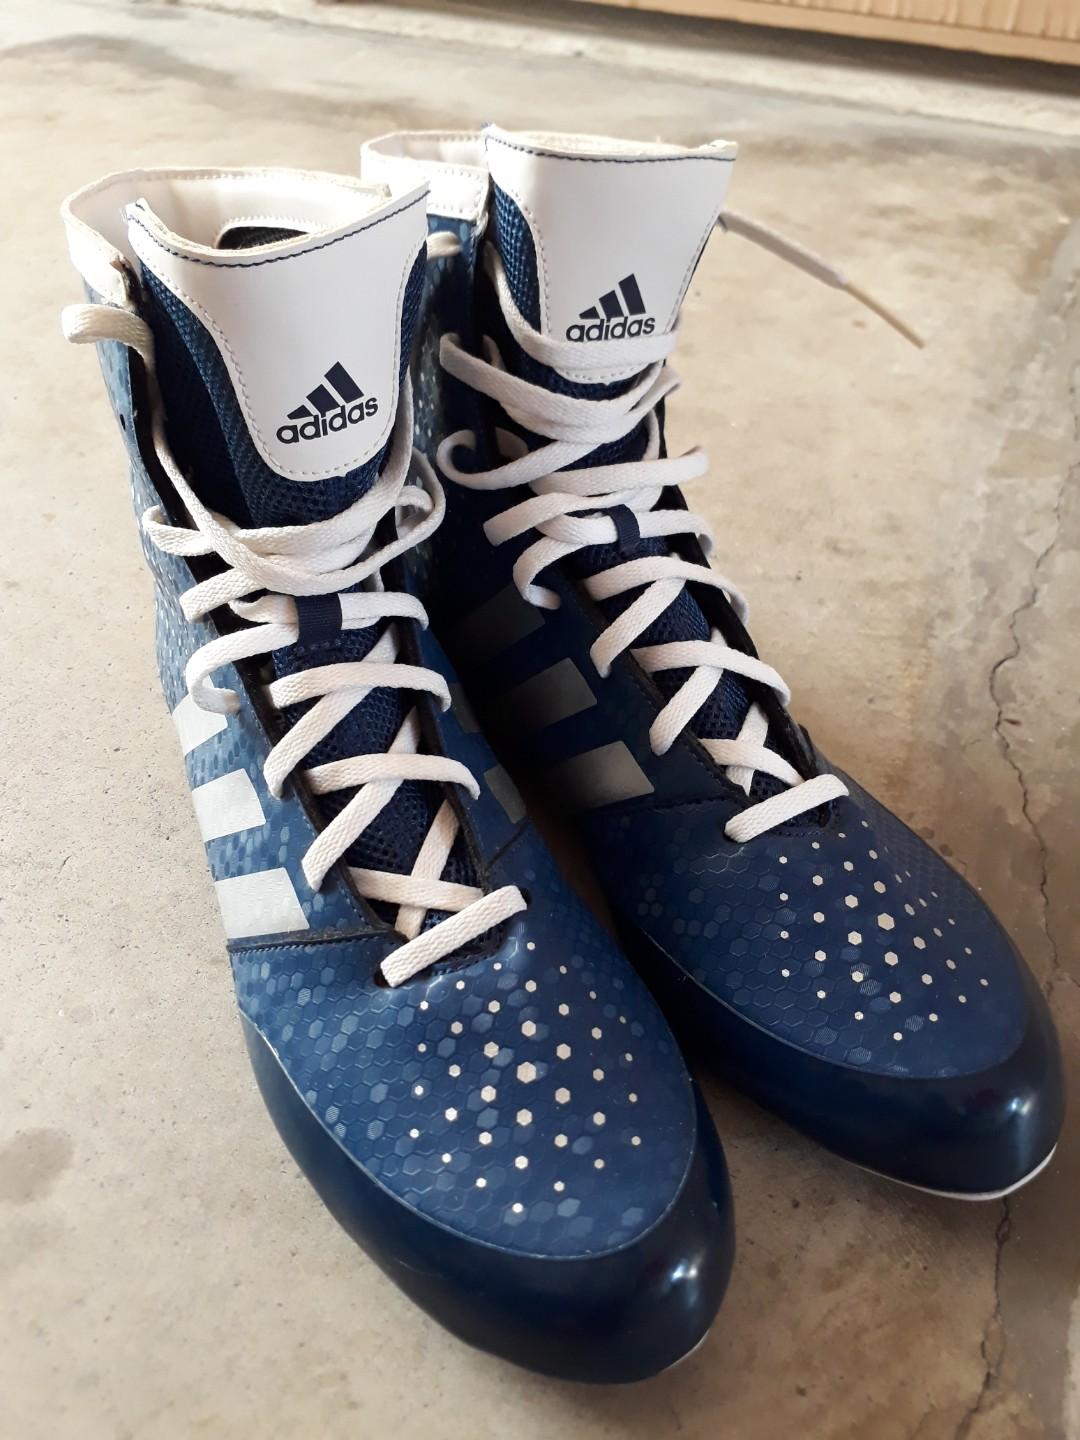 adidas ko legend boxing shoes